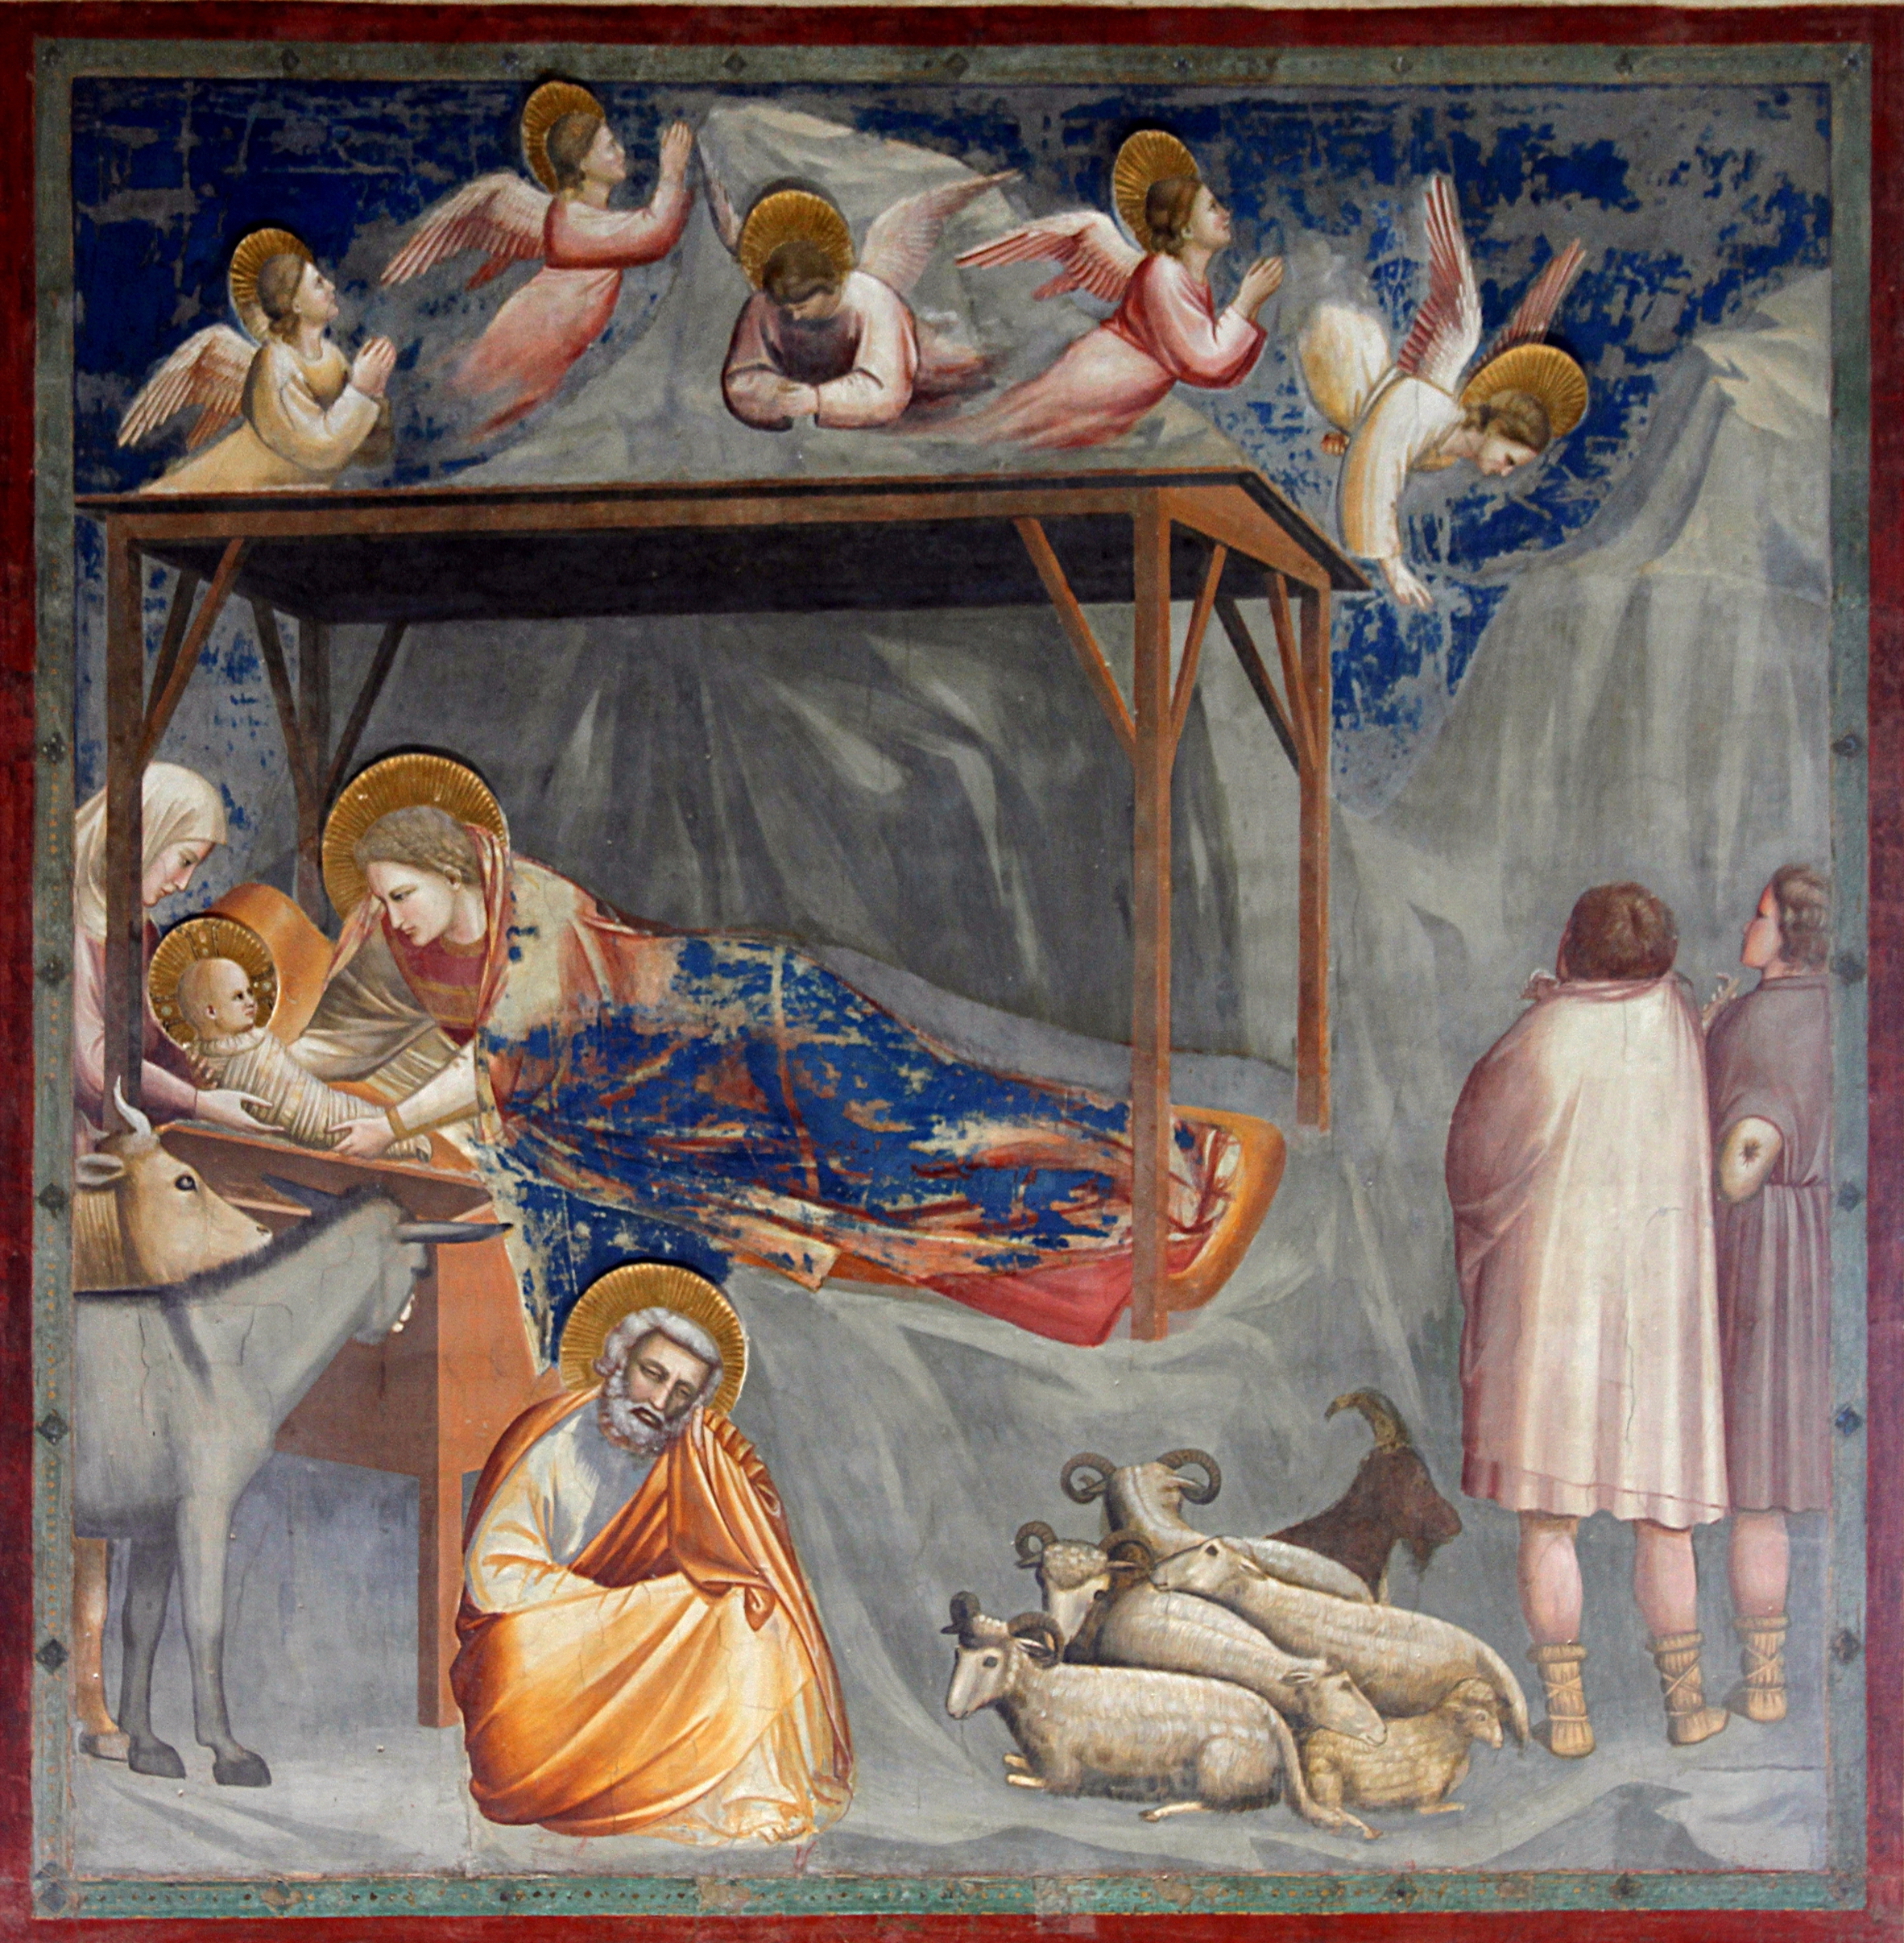 Krisztus születése by Giotto di Bondone - 1303–1305 - 200 x 185 cm 